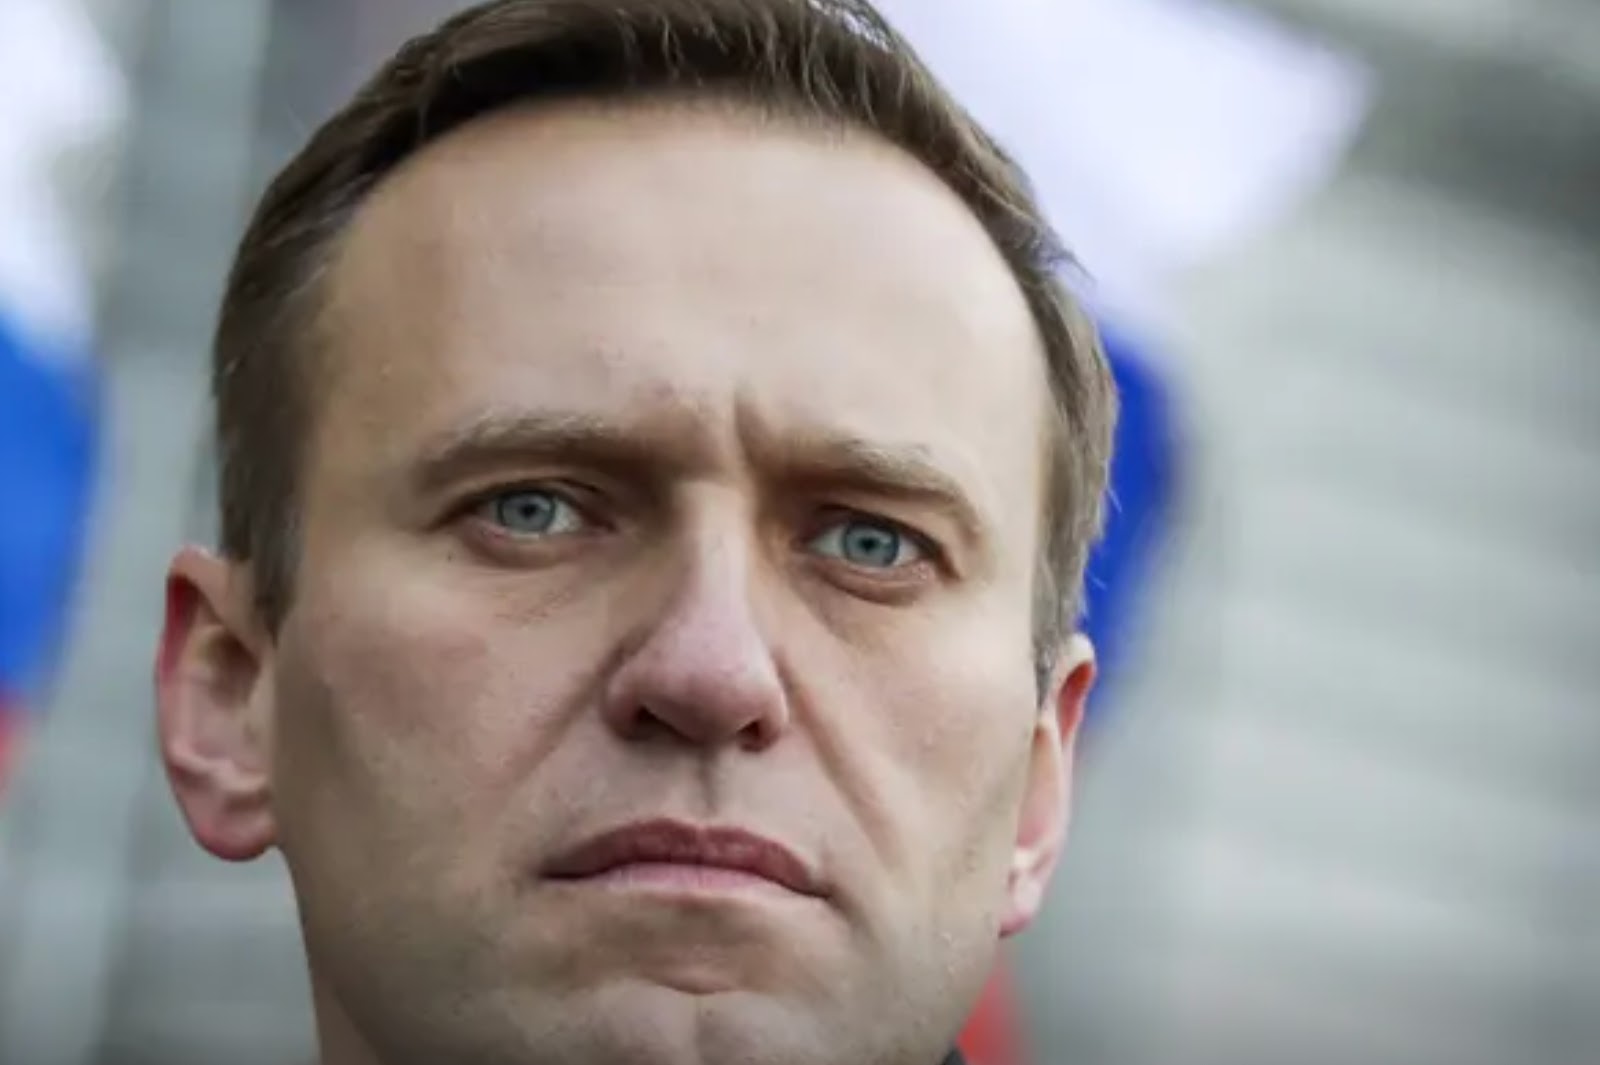 Putin critic Alexei Navalny, poisoned in Russia (2020)